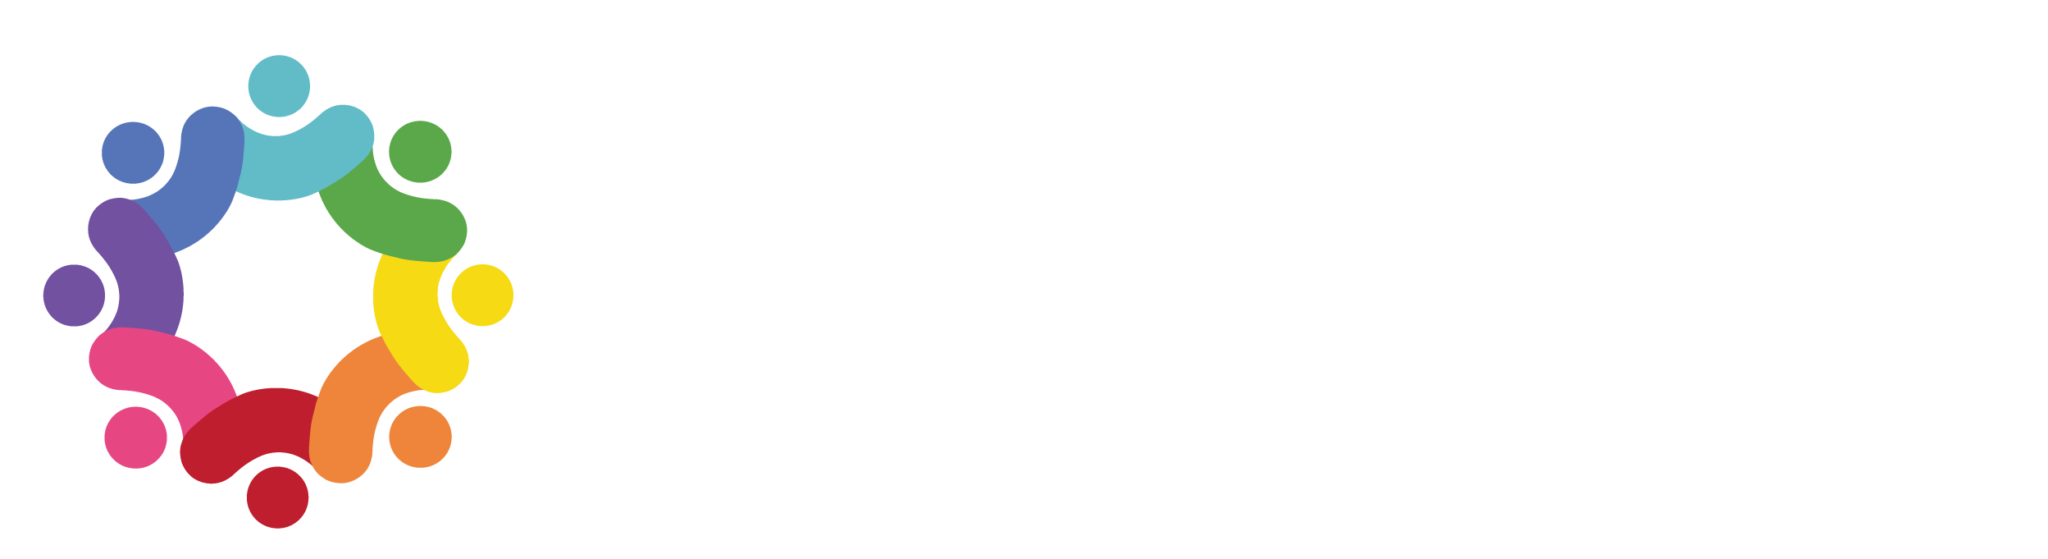 Fostoria Chamber of Commerce logo